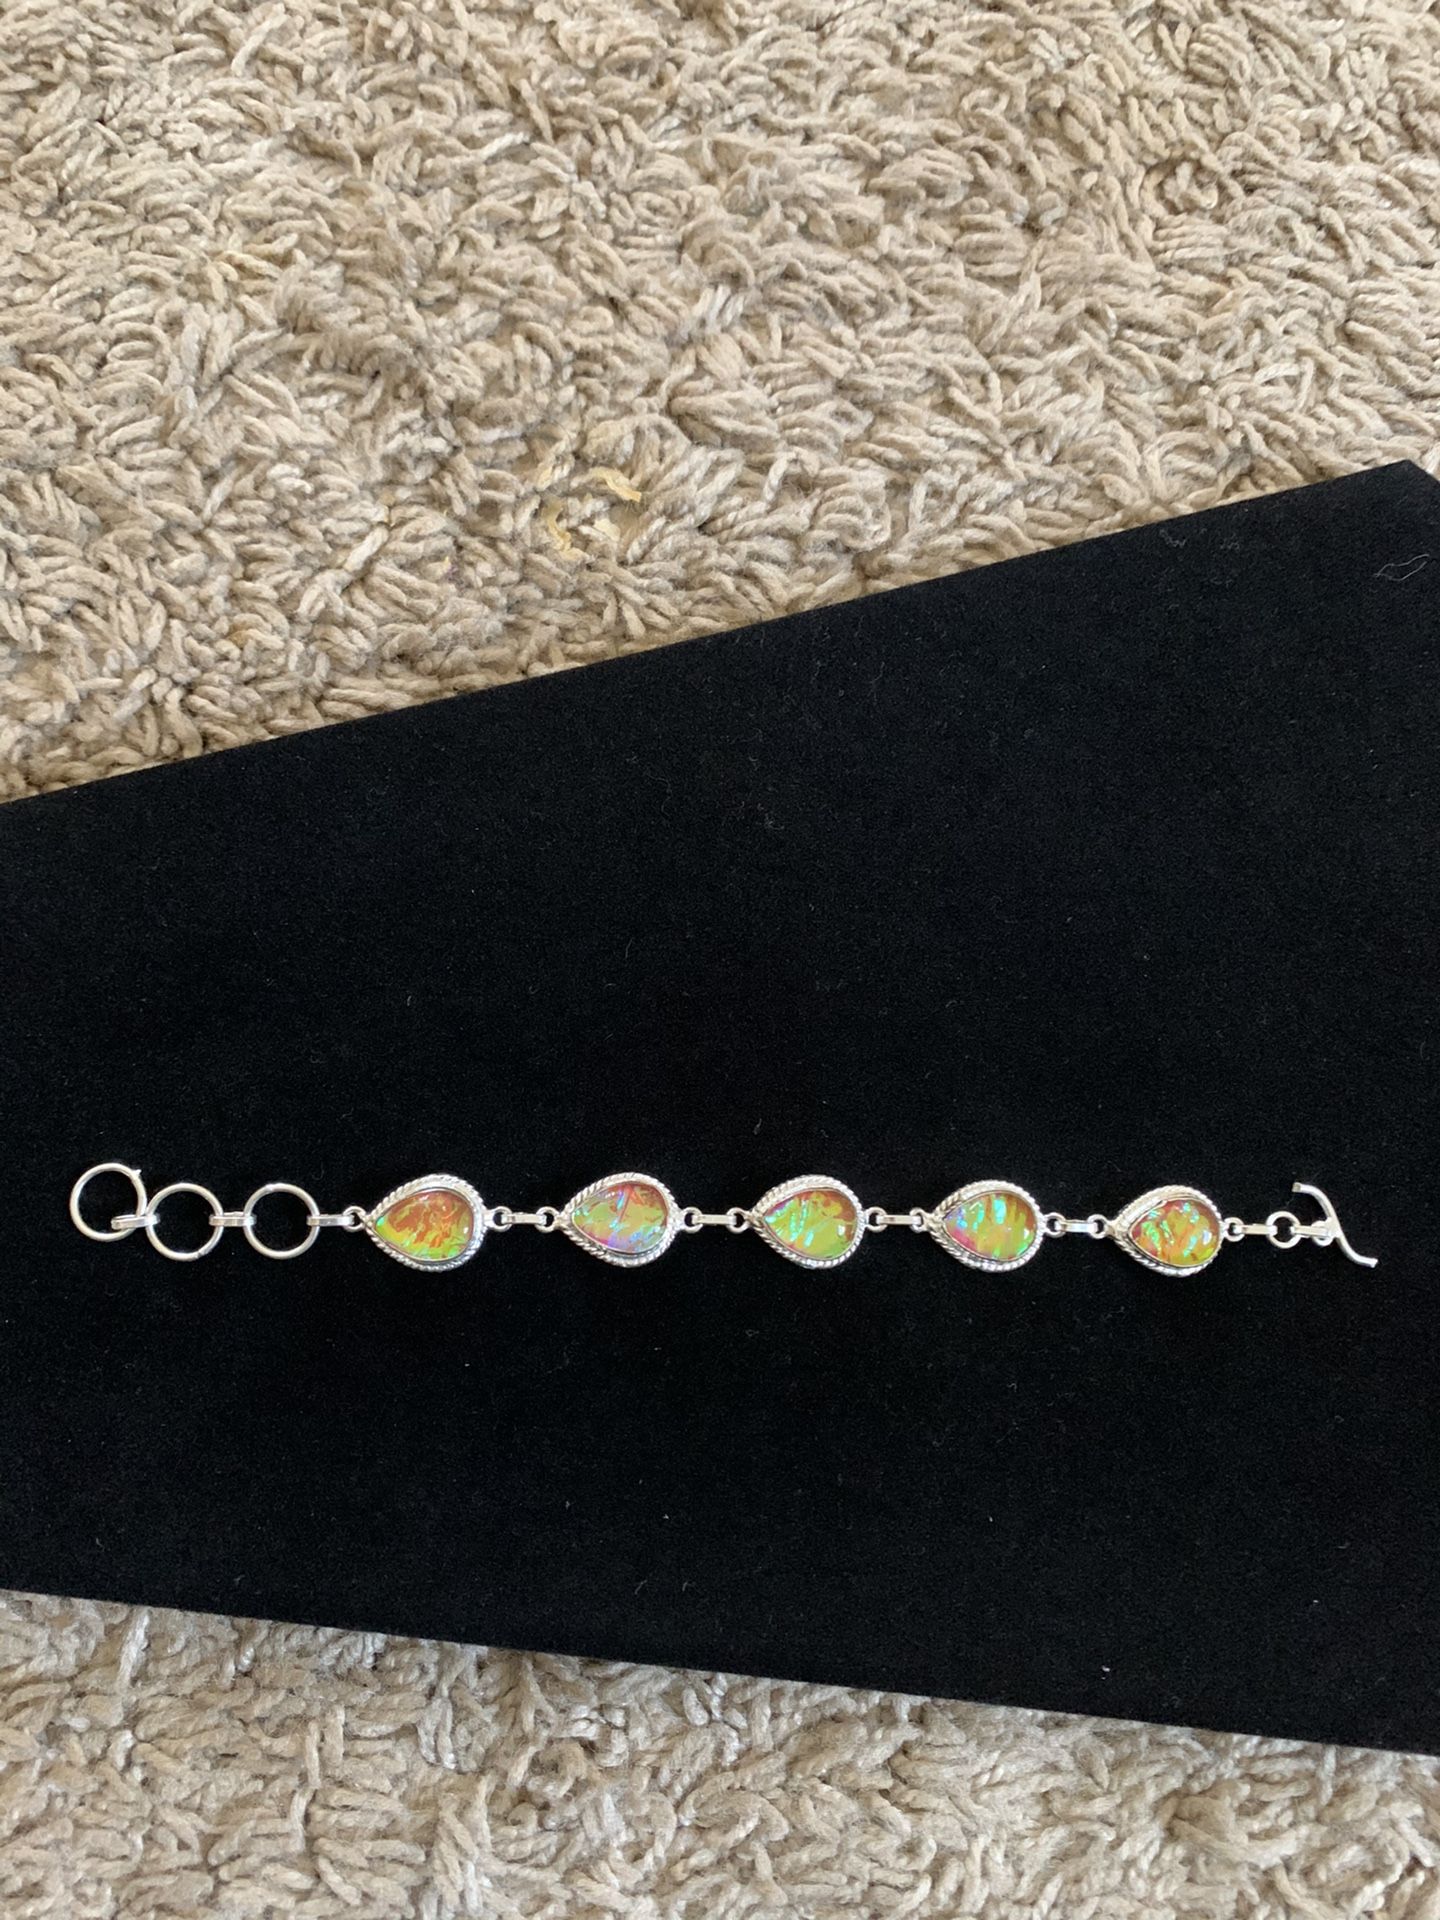 Rainbow opal bracelet 925 silver gem 30$ firm